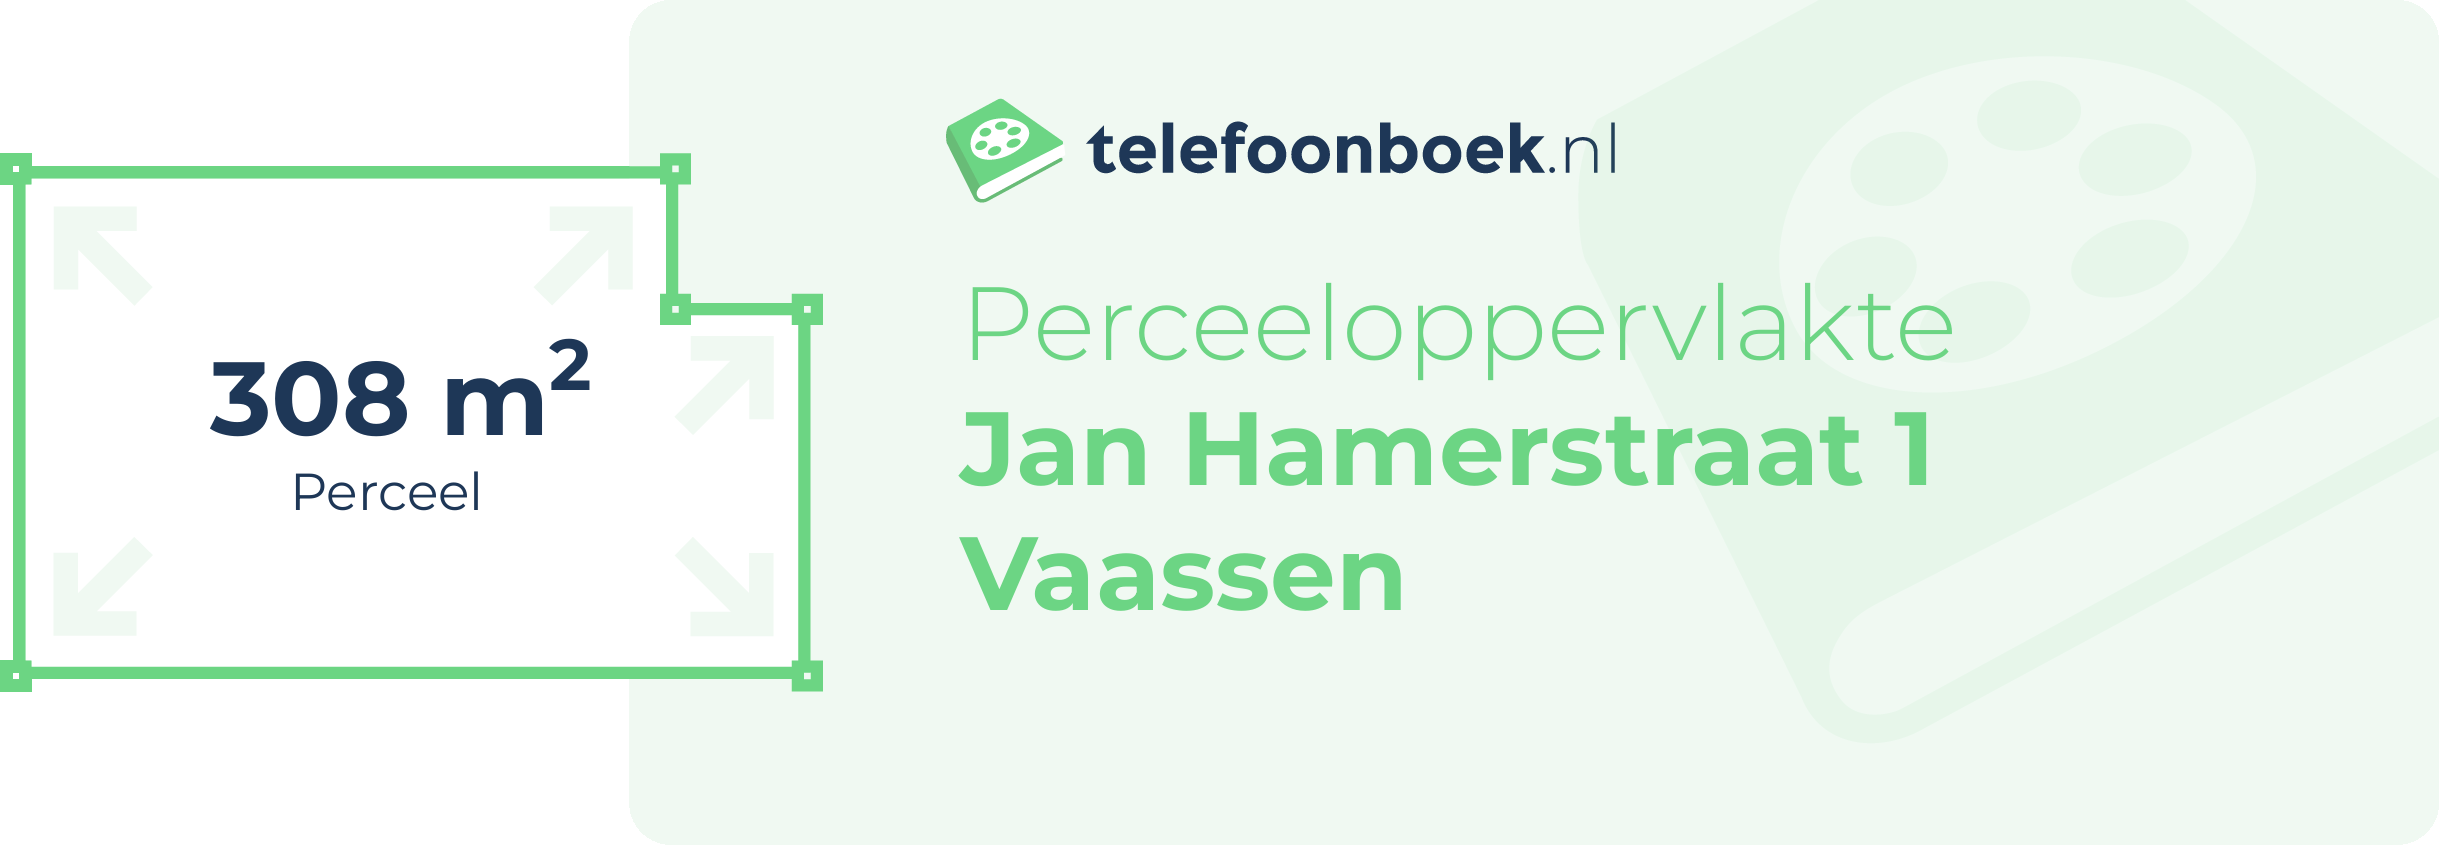 Perceeloppervlakte Jan Hamerstraat 1 Vaassen